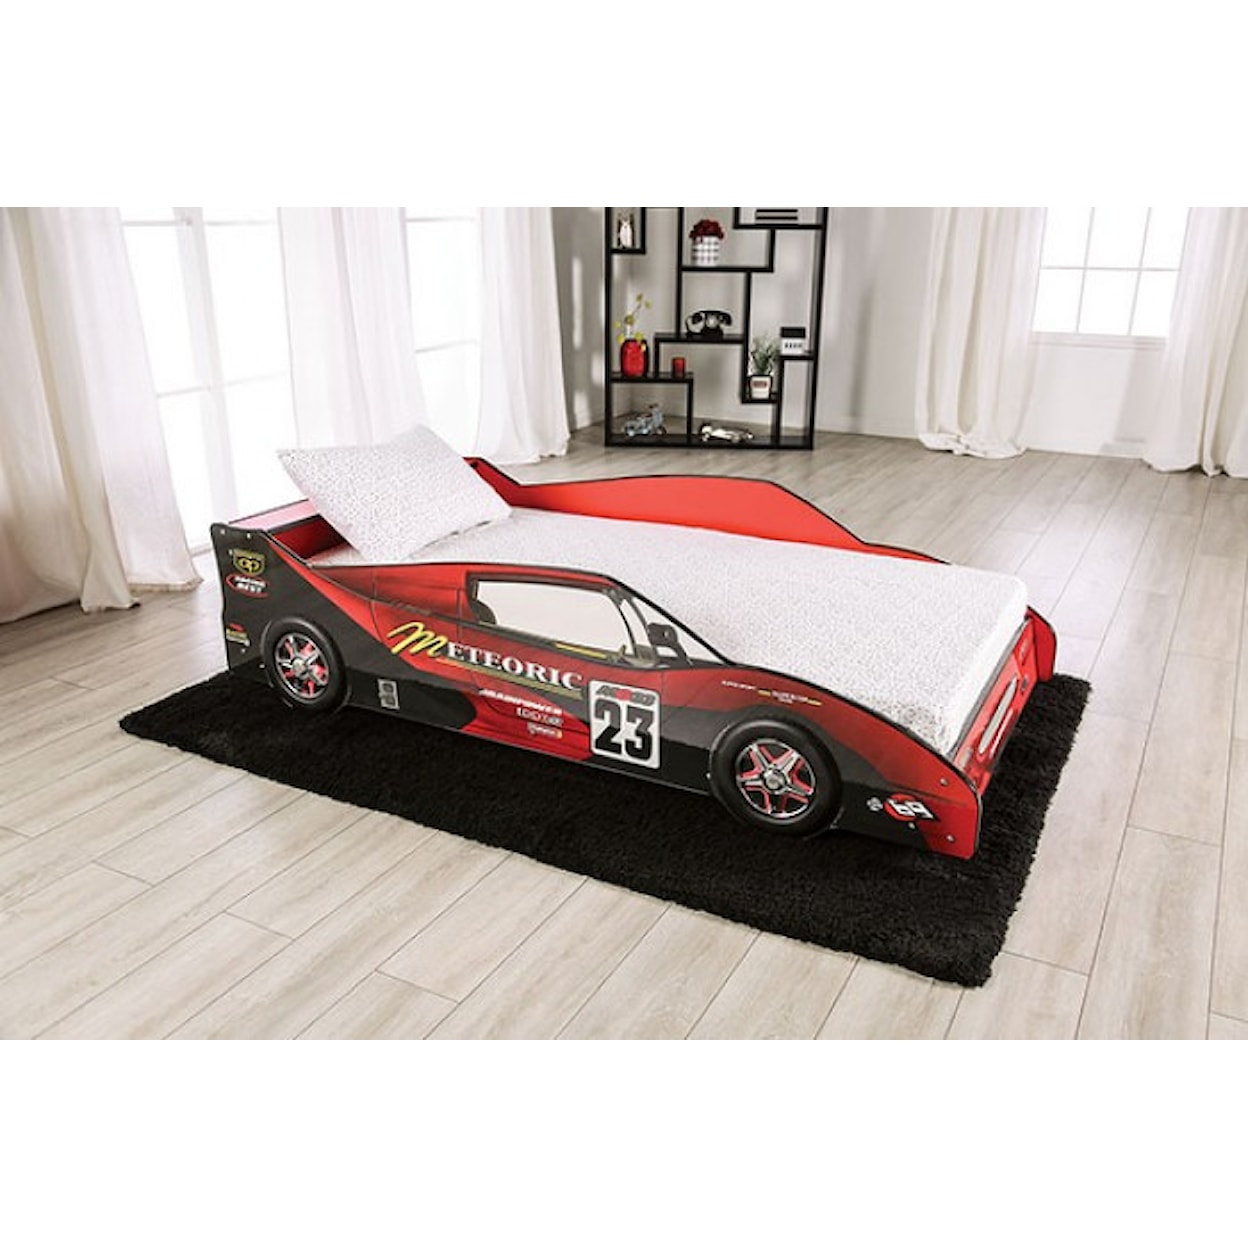 Furniture of America - FOA Dustrack Twin Race Car Bed